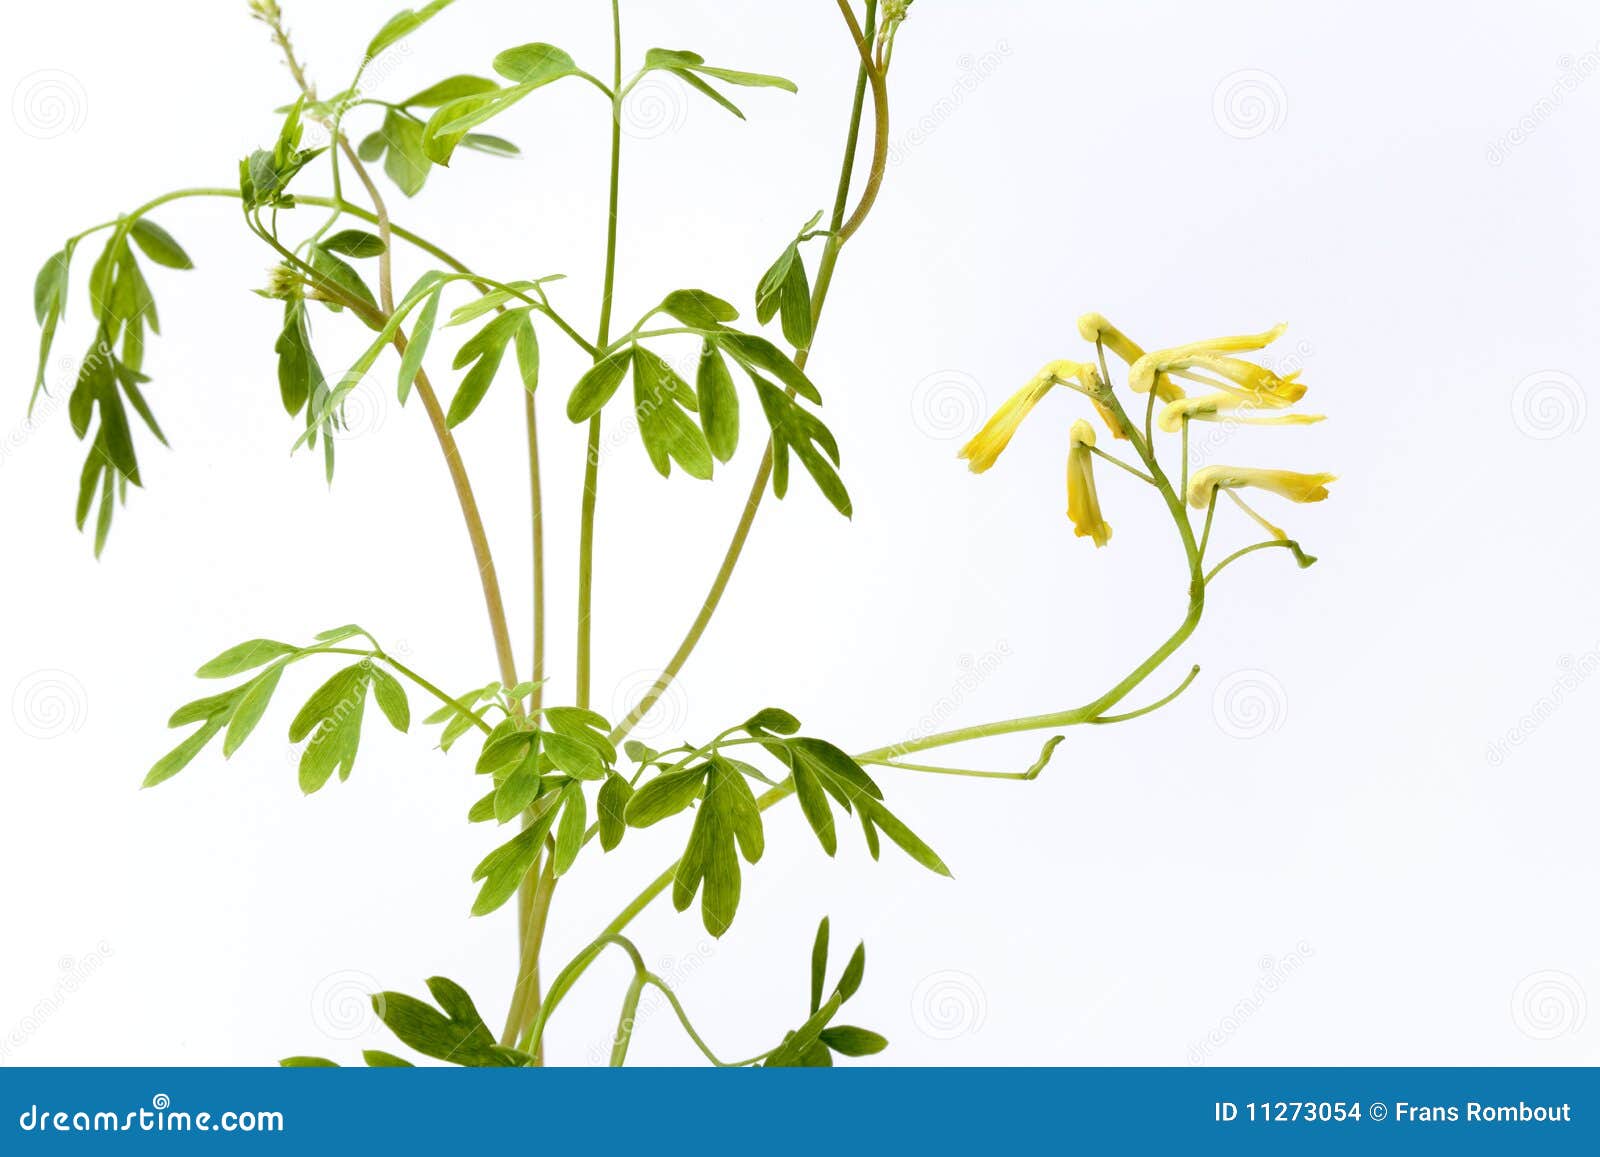 ruta graveolens with yellow flowers